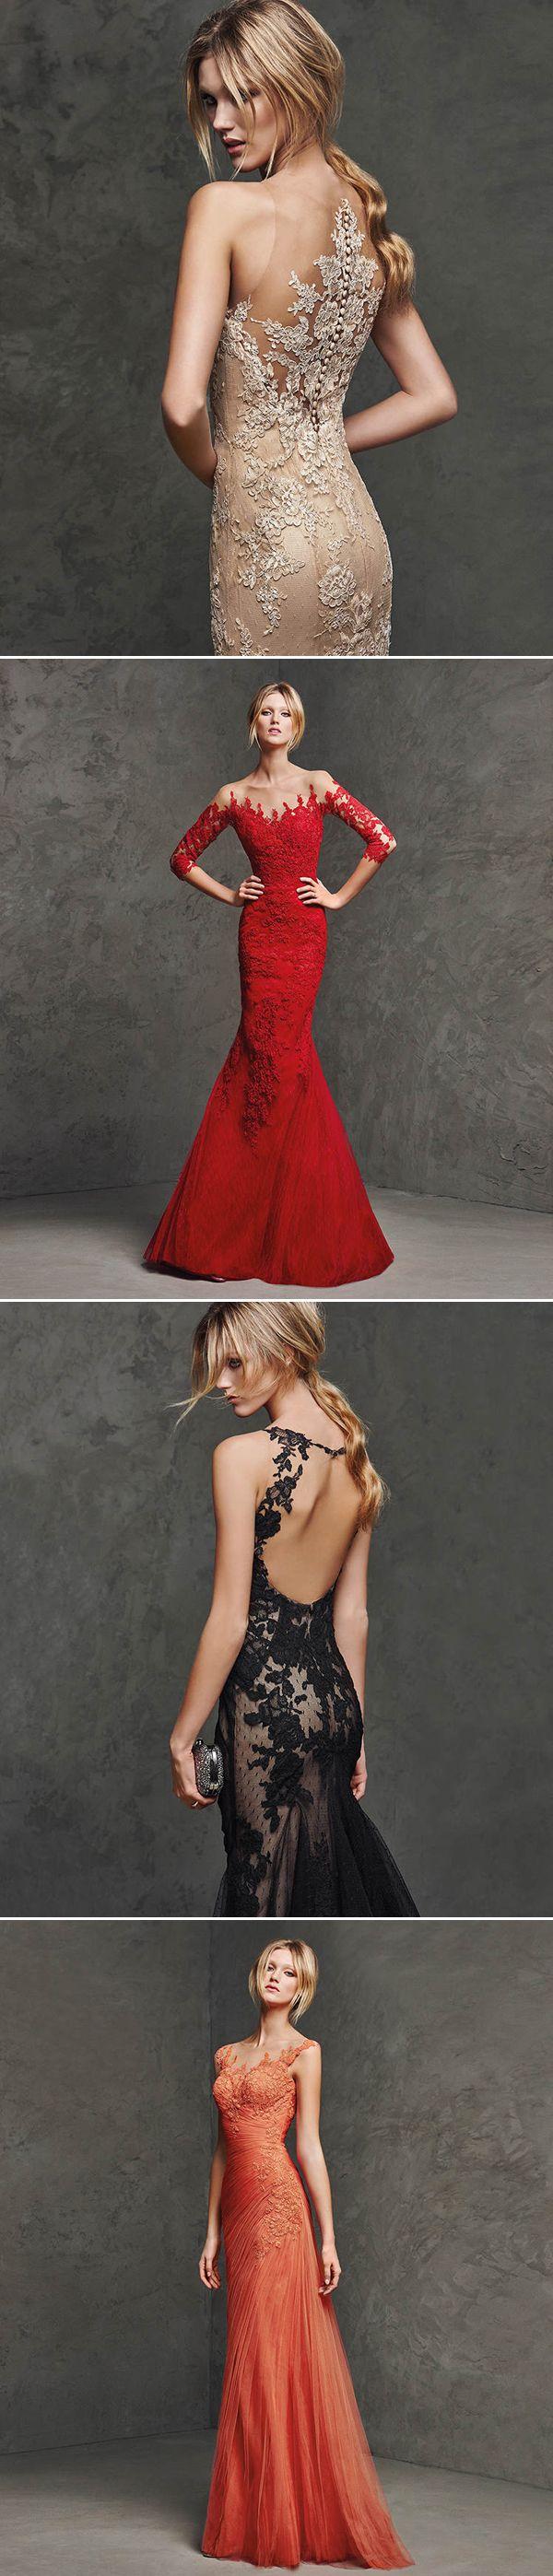 Wedding - Dress To Impress! 32 Stunning Fashion-forward Reception Gowns